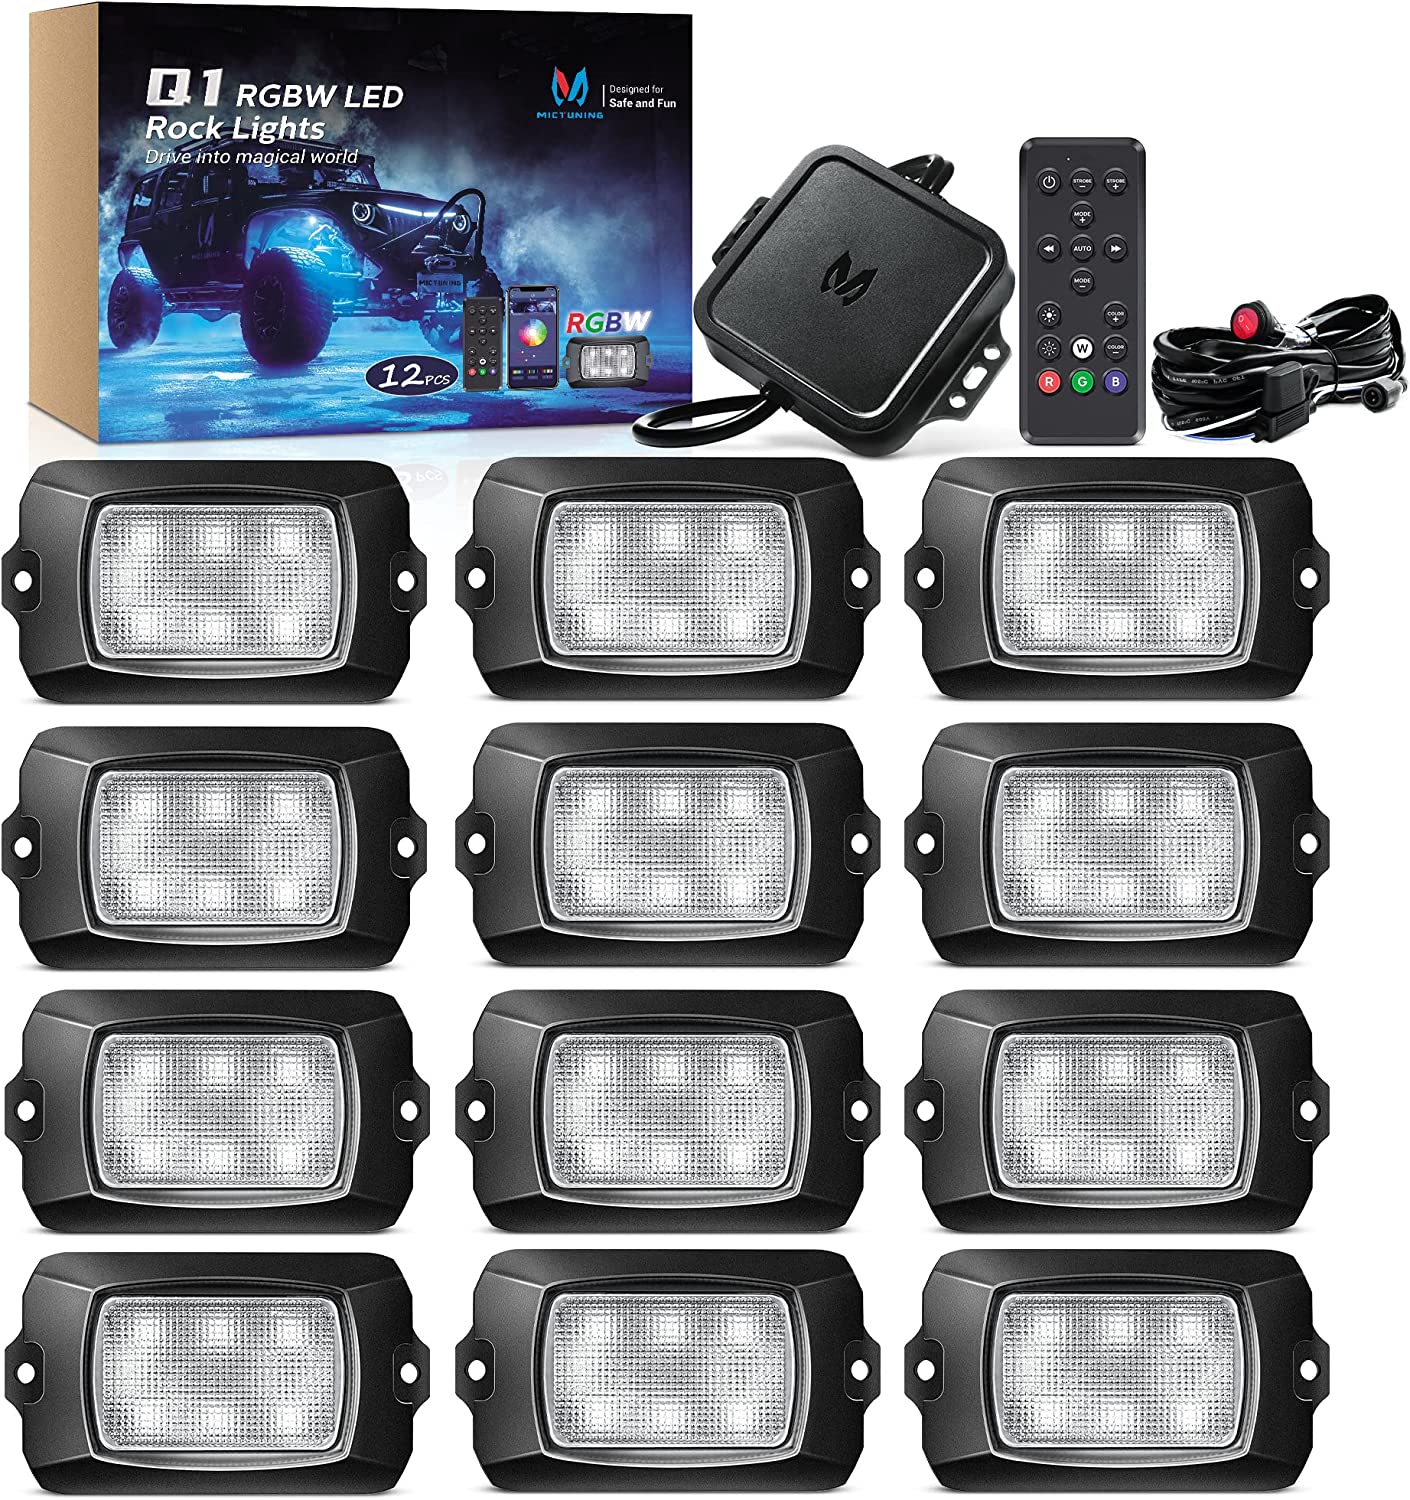 12 Pods Newest Q1 RGBW Color Changing LED Rock Light Kit for